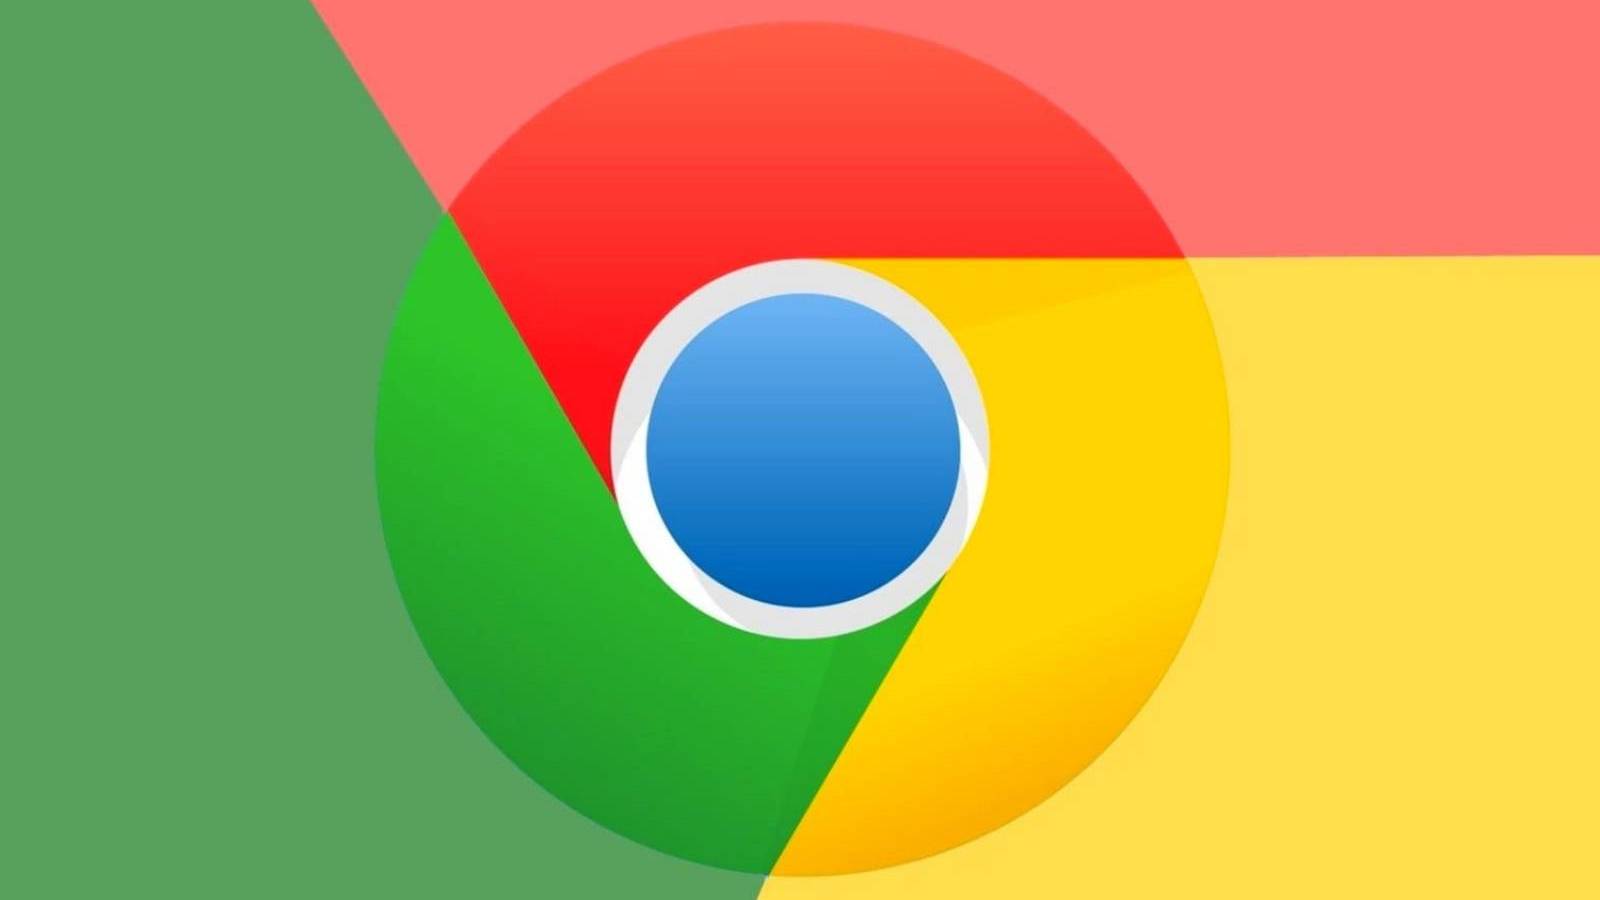 Actualizare a Google Chrome cu Noutati Oferite in Telefoane si Tablete